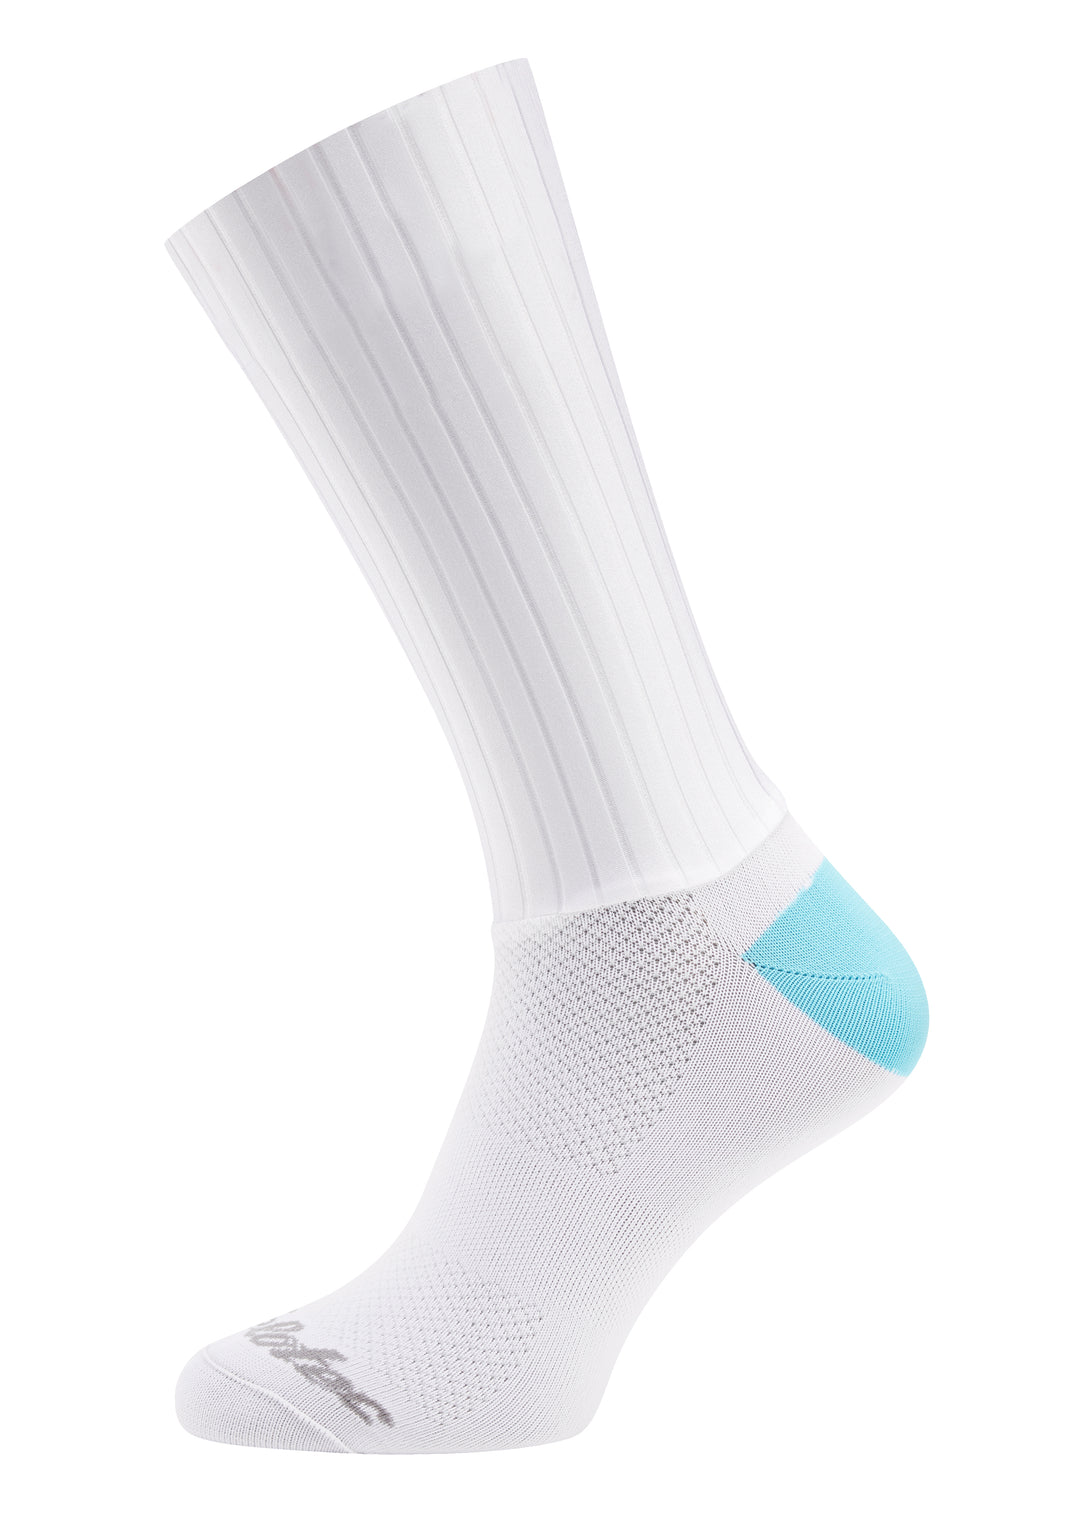 Aero-socks Pro (sin marca)